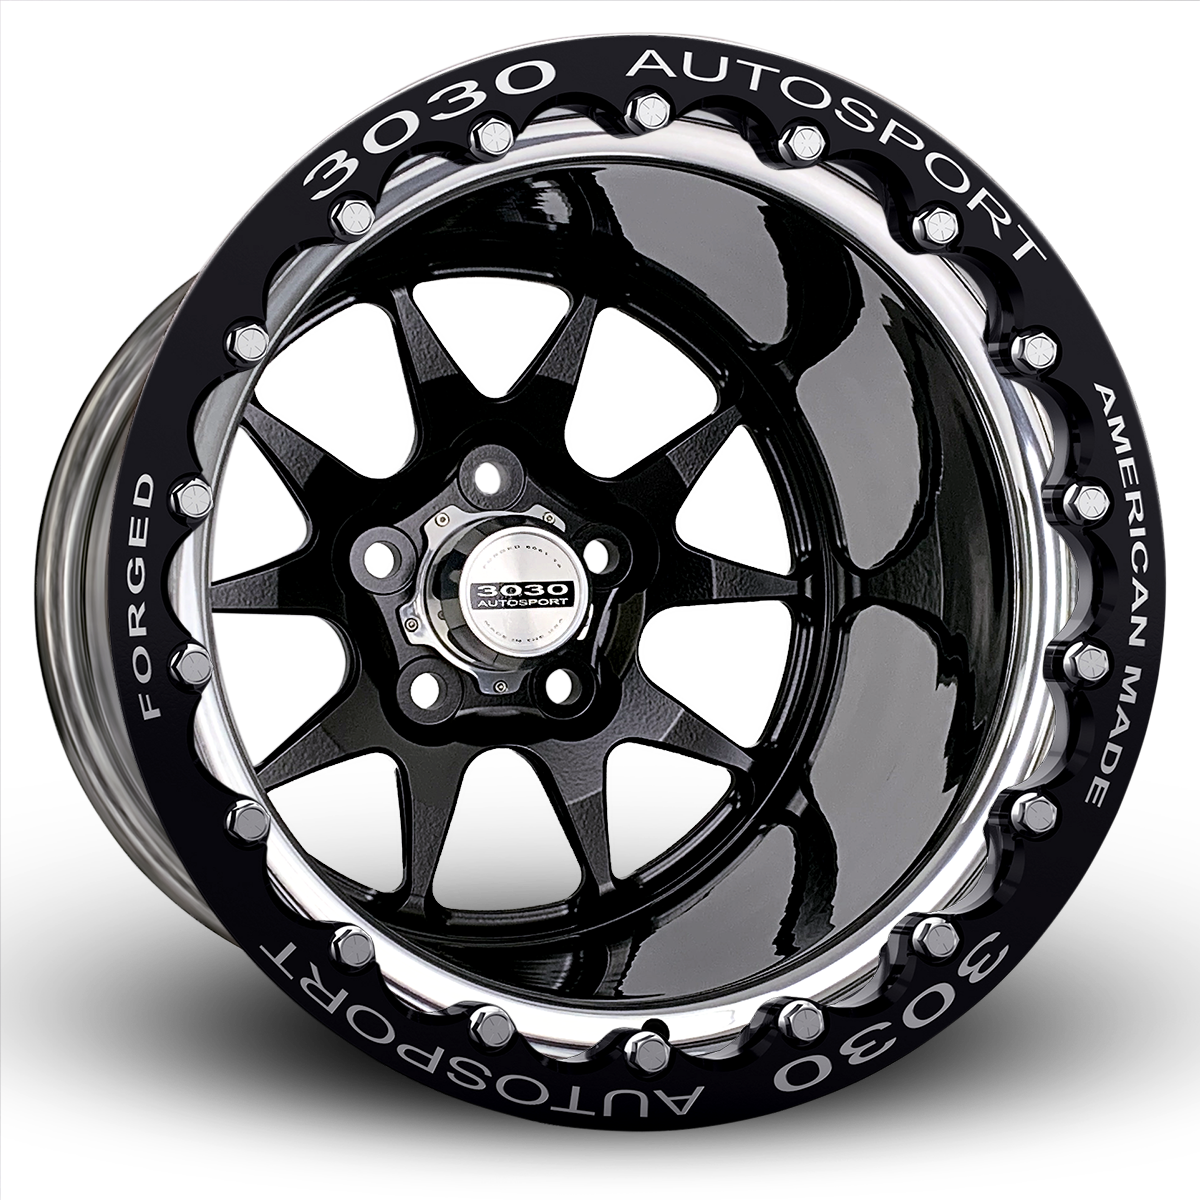 MACH-10 Double-Beadlock Wheel, Size: 15x15", Bolt Pattern: 5x5", Backspace: 6" [Black/Polished]